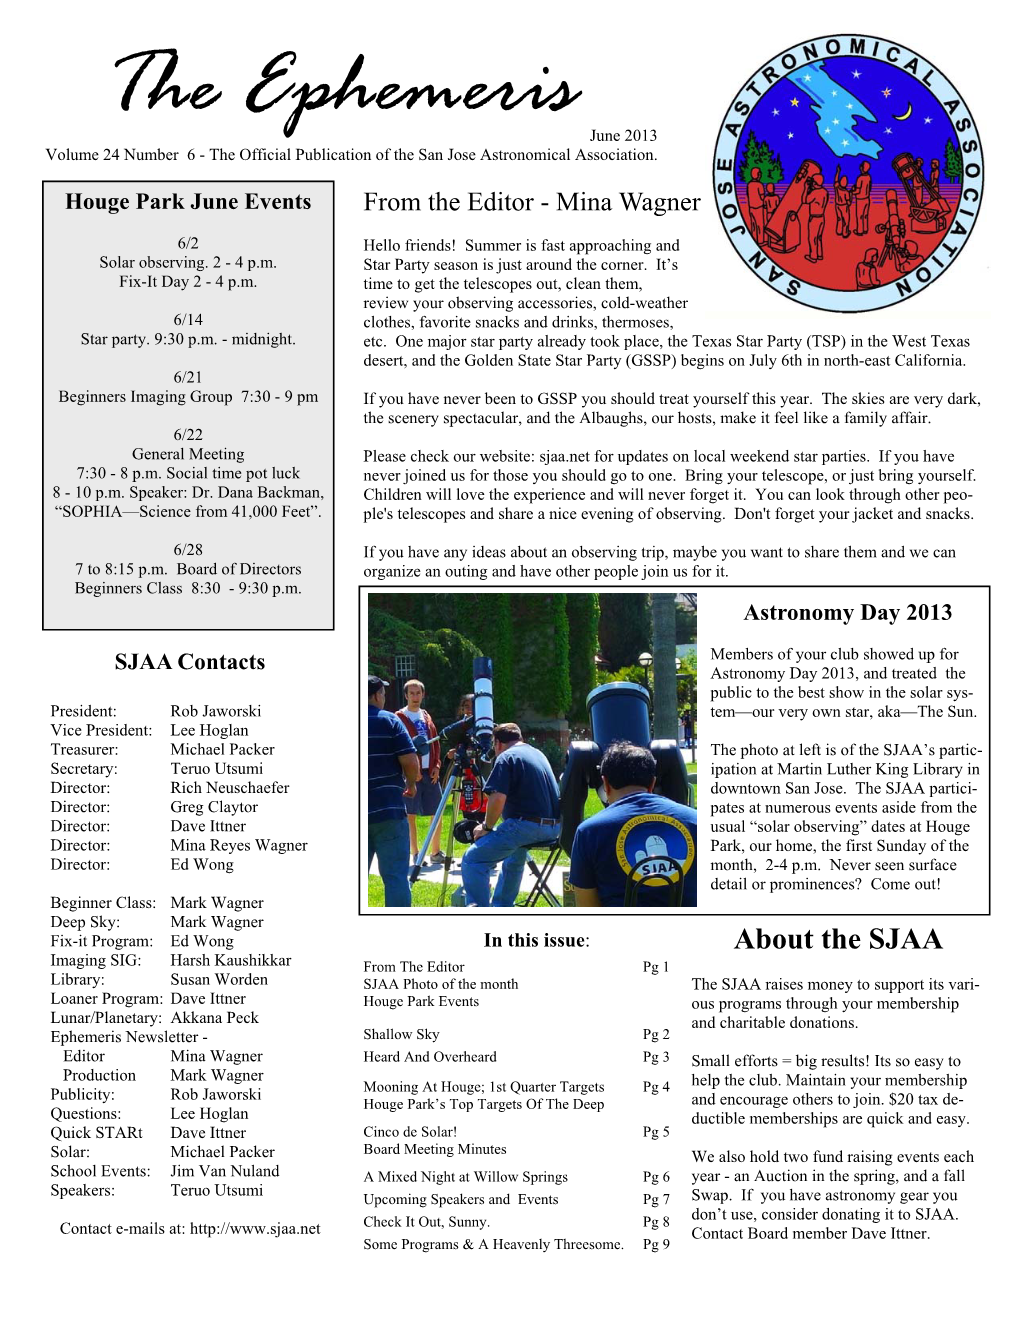 June 2013 Volume 24 Number 6 - the Official Publication of the San Jose Astronomical Association